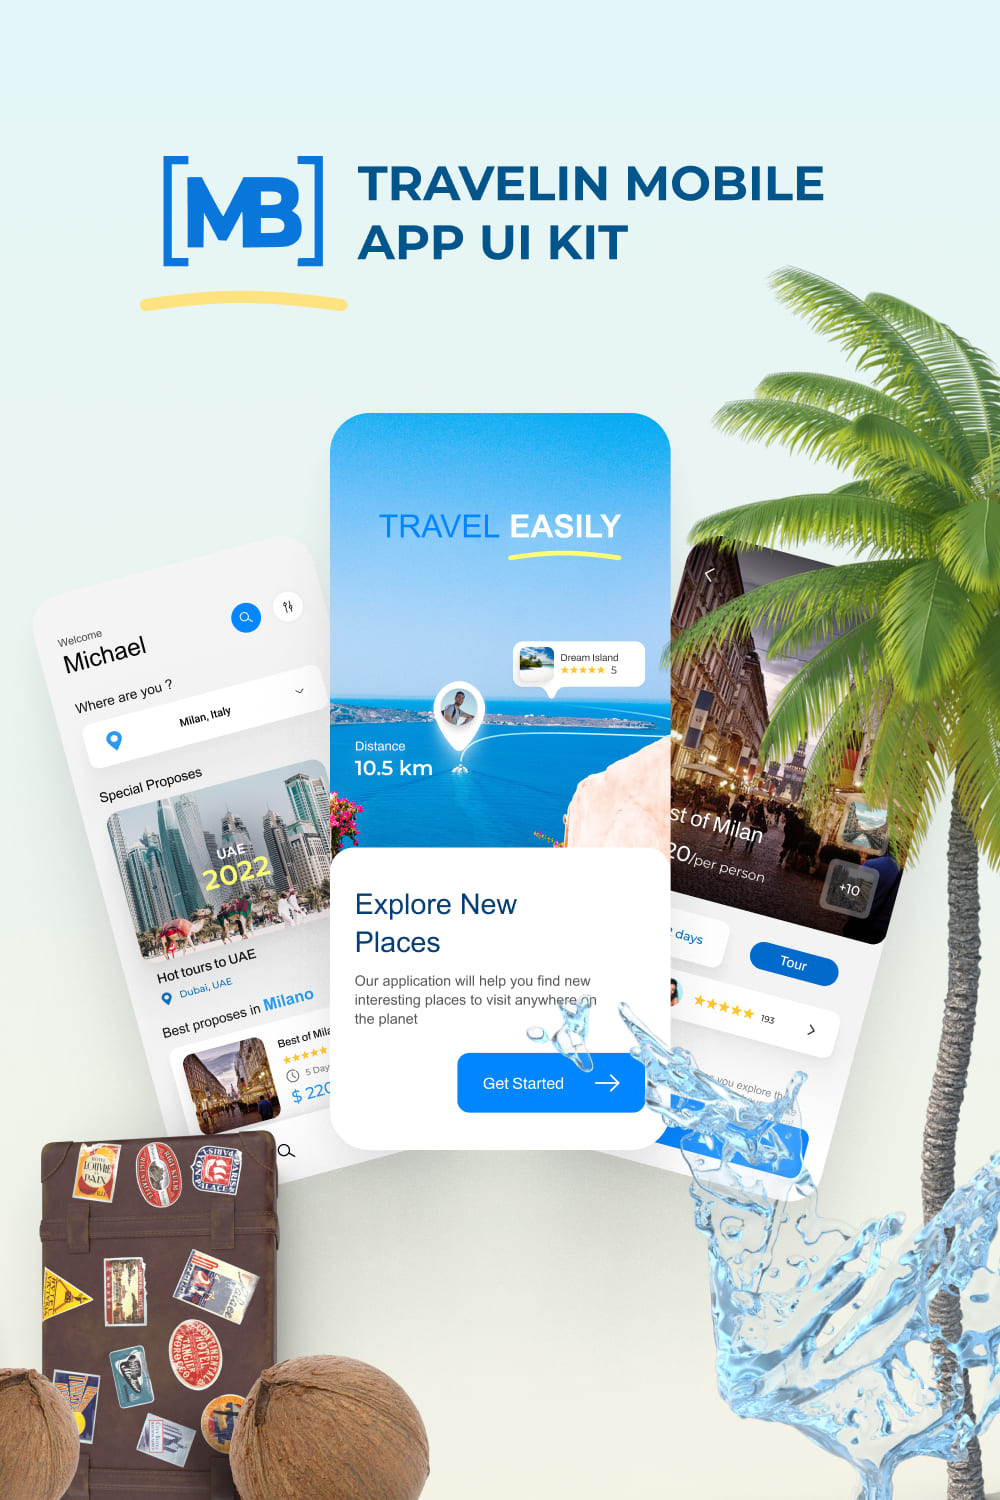 Traveling Mobile App UI Kit.